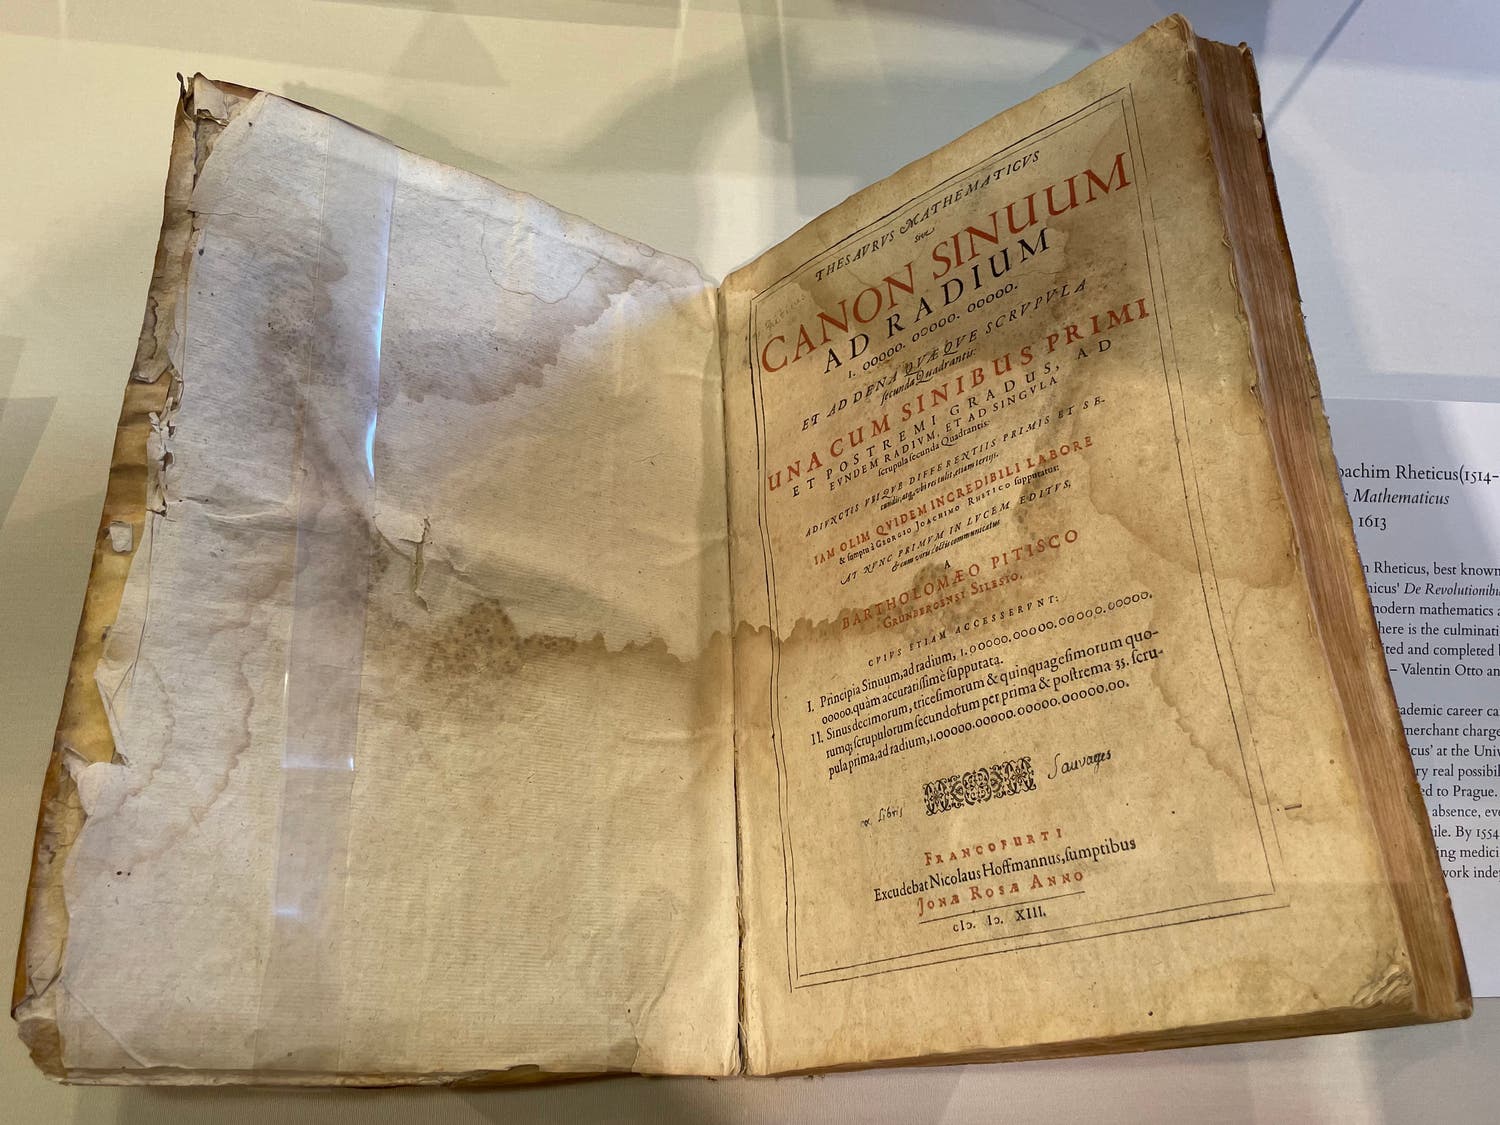 Photo of book by Georg Joachim Rheticus, ed. Bartholamaeus Pitiscus & Valentinus Otho, Thesaurus Mathematicus. Frankfurt, 1613.